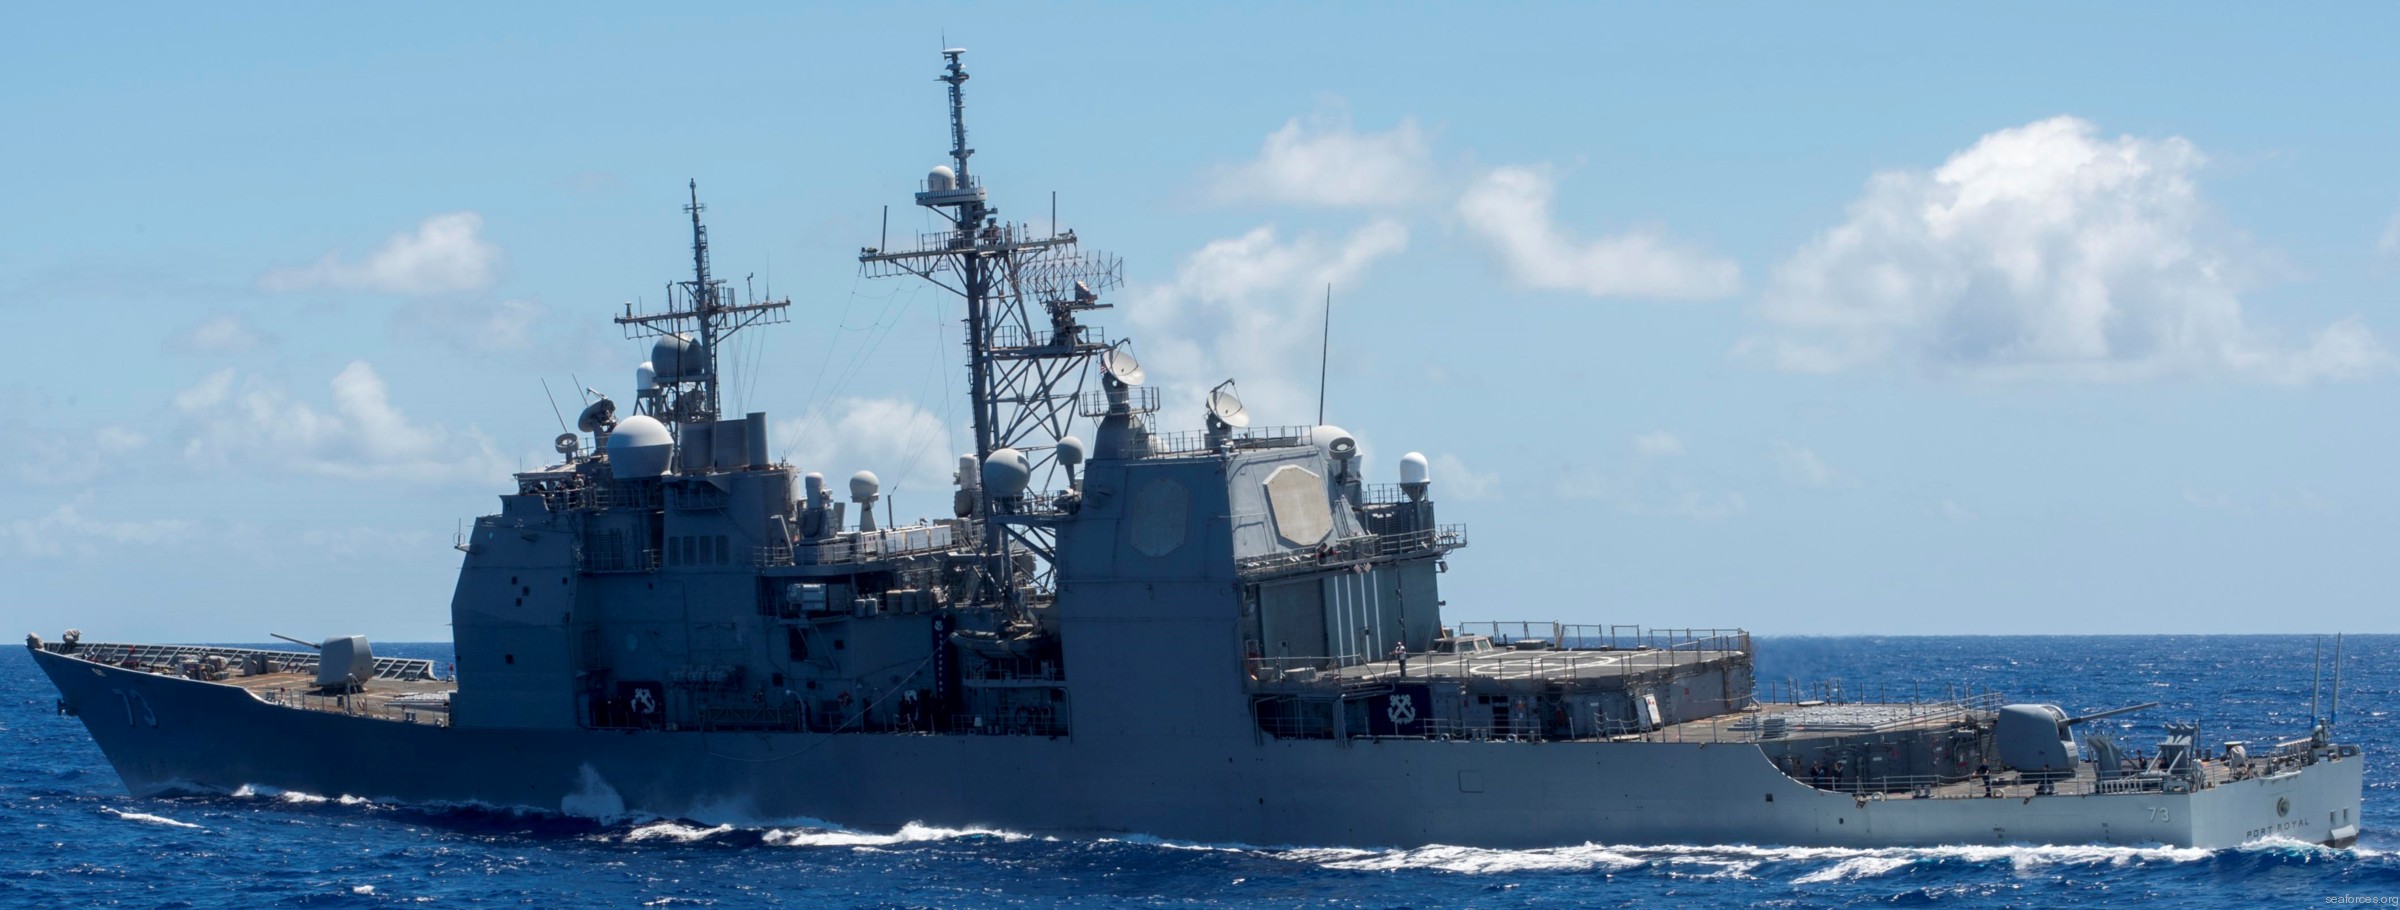 cg-73 uss port royal ticonderoga class guided missile cruiser navy 08 rimpac 2014